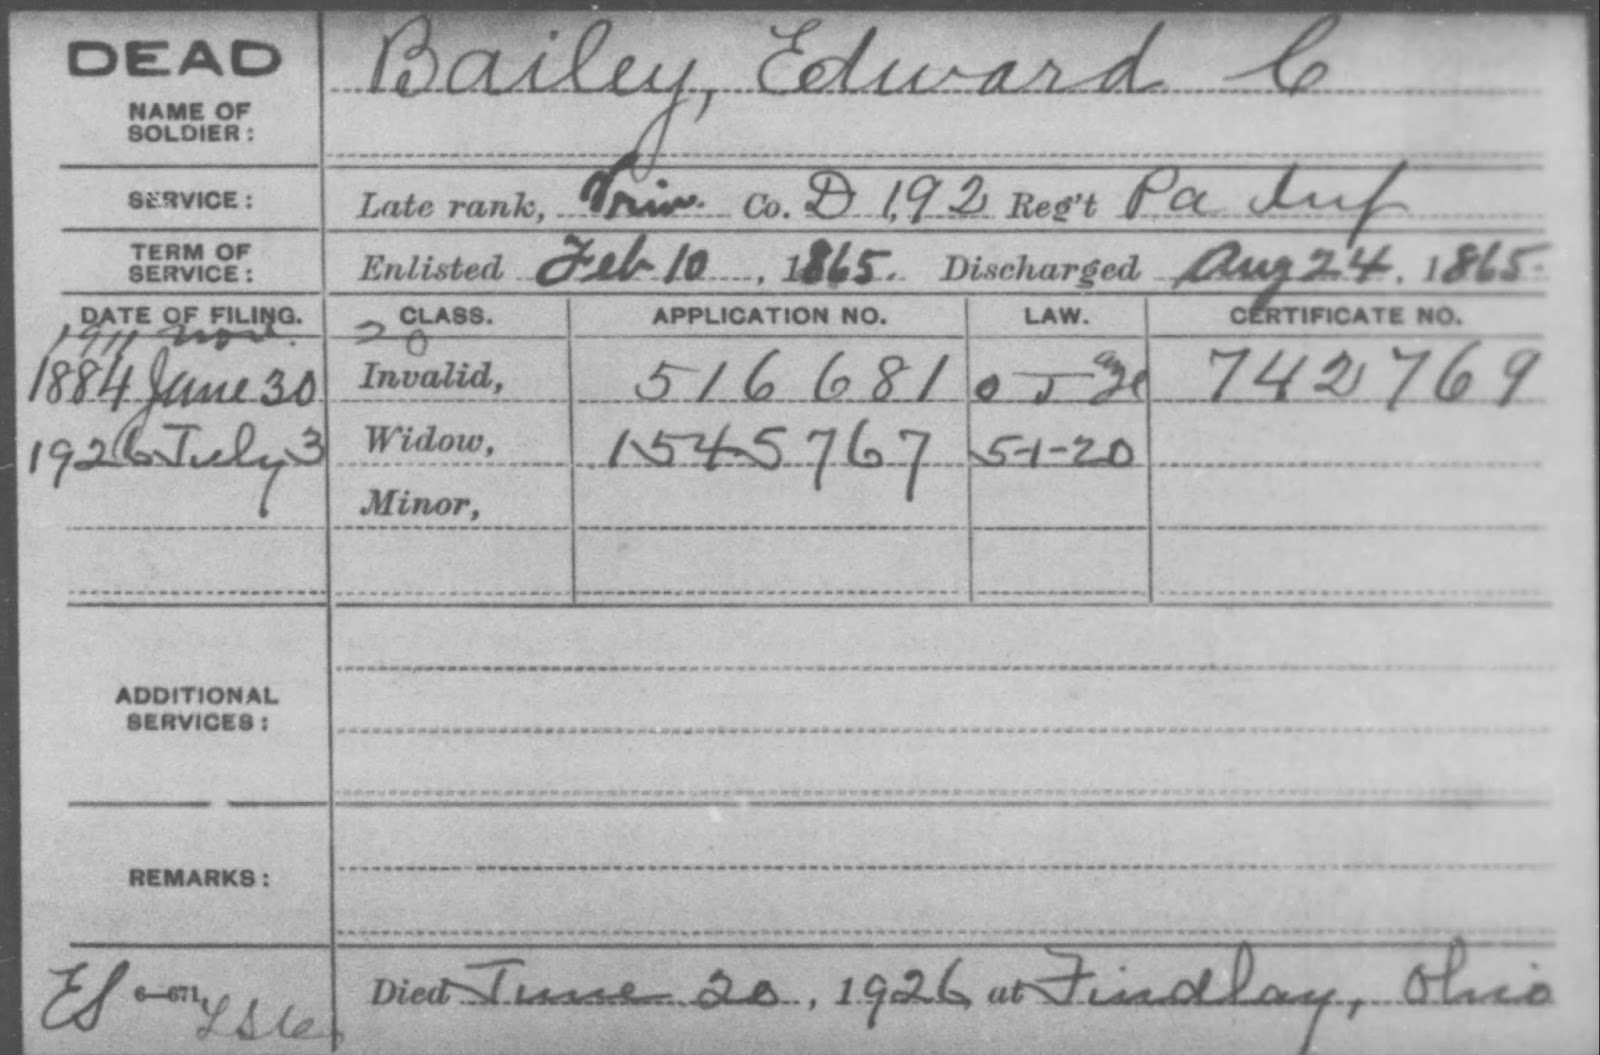 Climbing My Family Tree: Index Card, Civil War Pensions, Edward C. Bailey